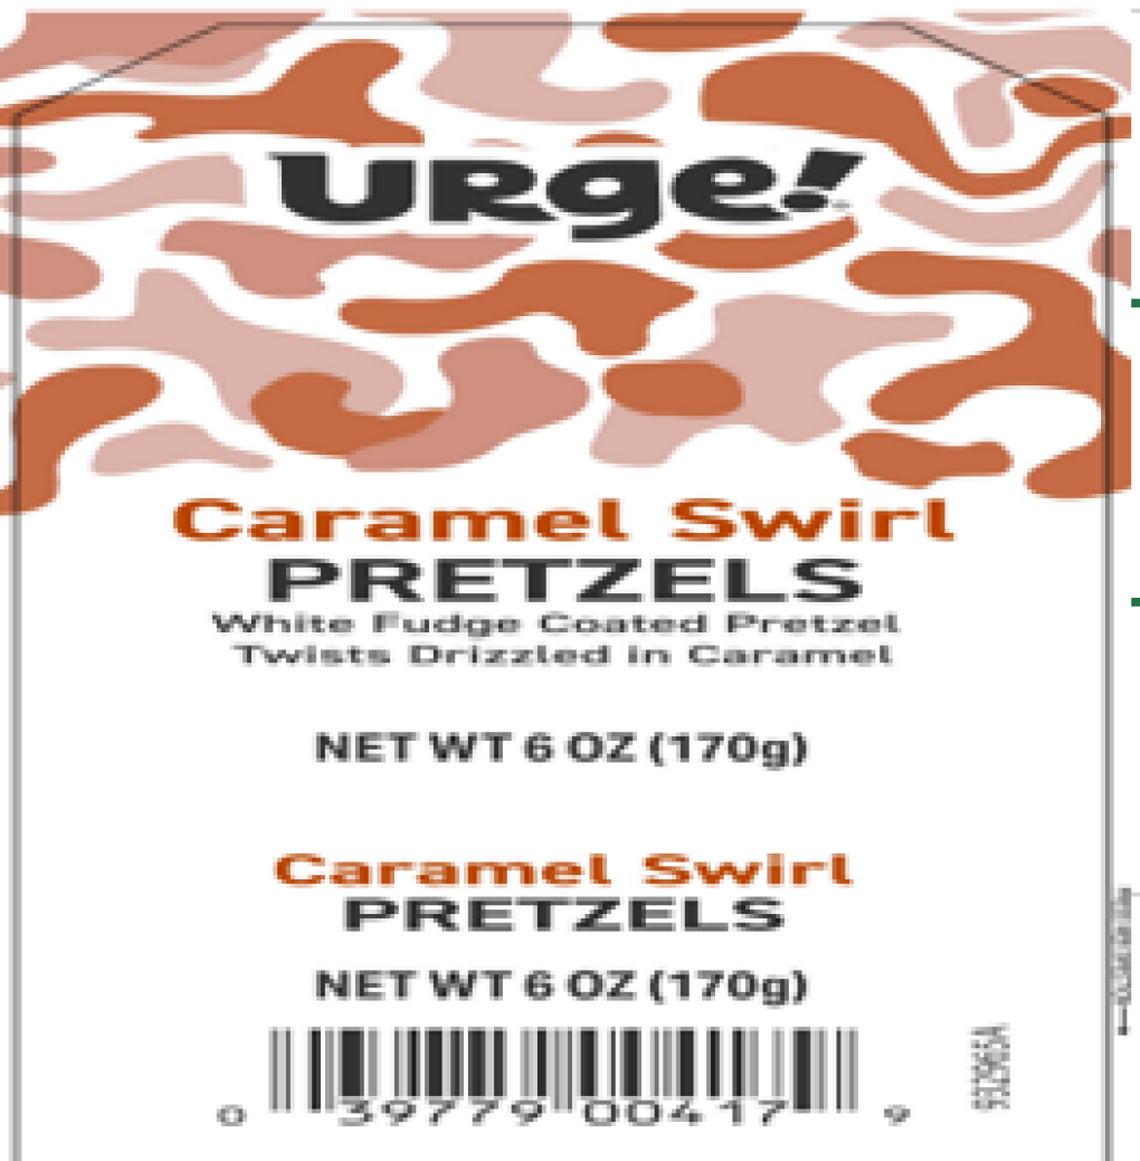 Urge! Caramel Swirl Pretzels